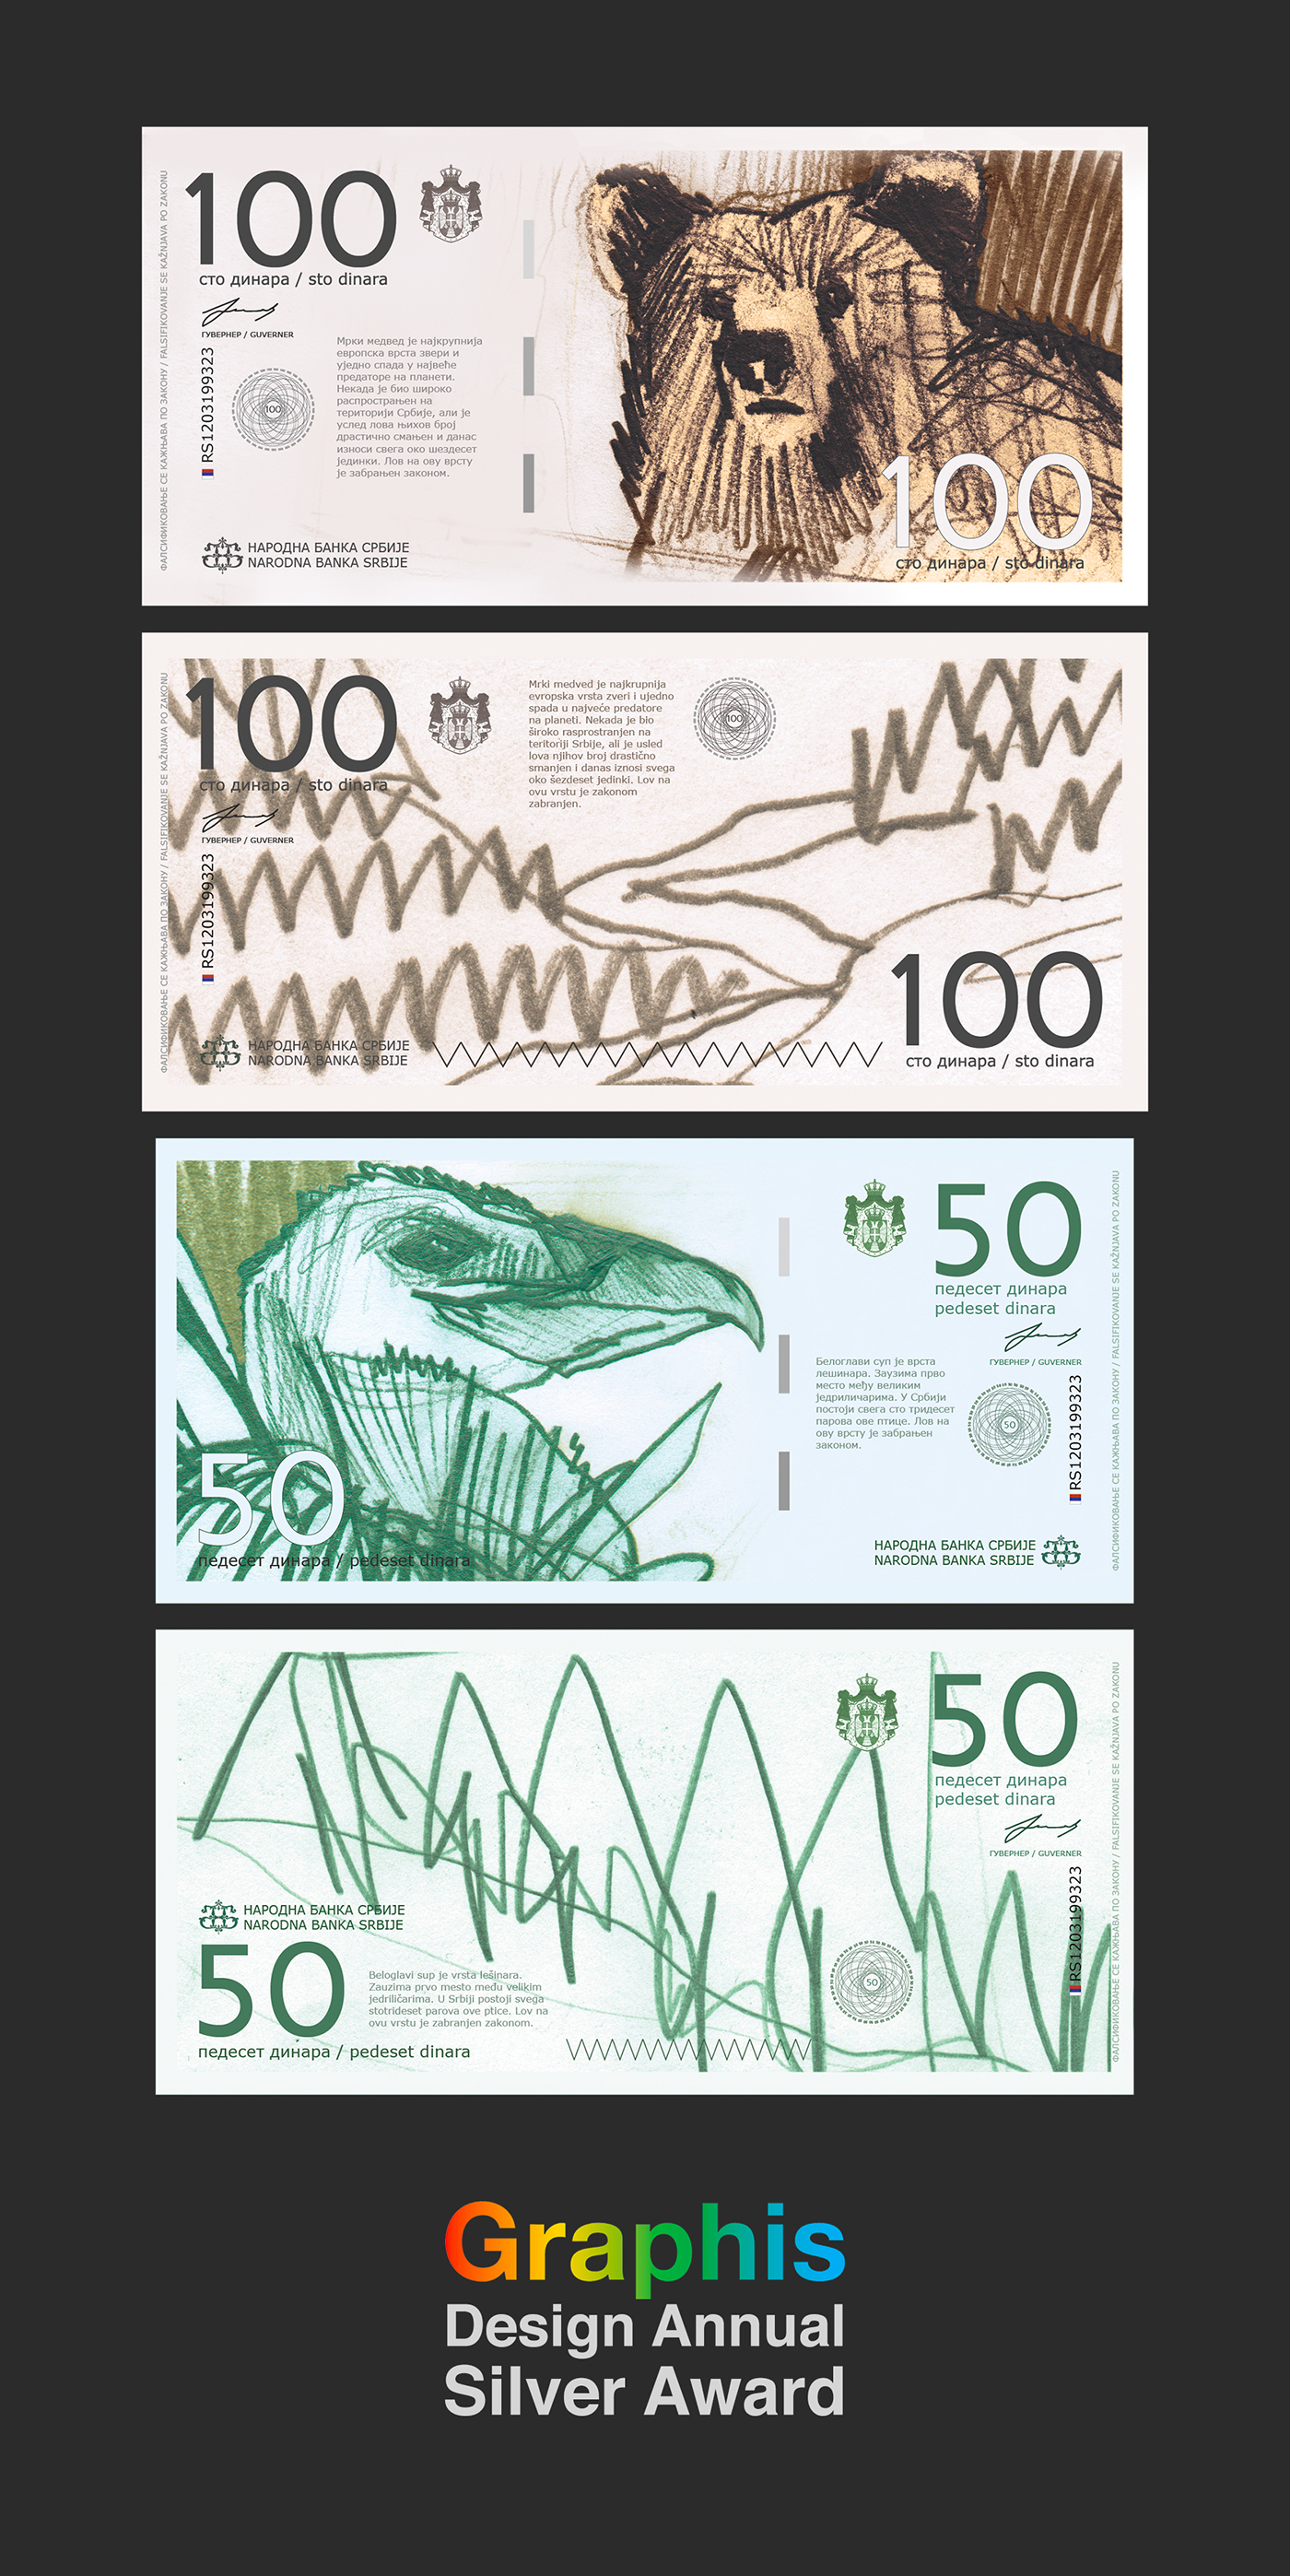 redesign serbian Banknote dinar design